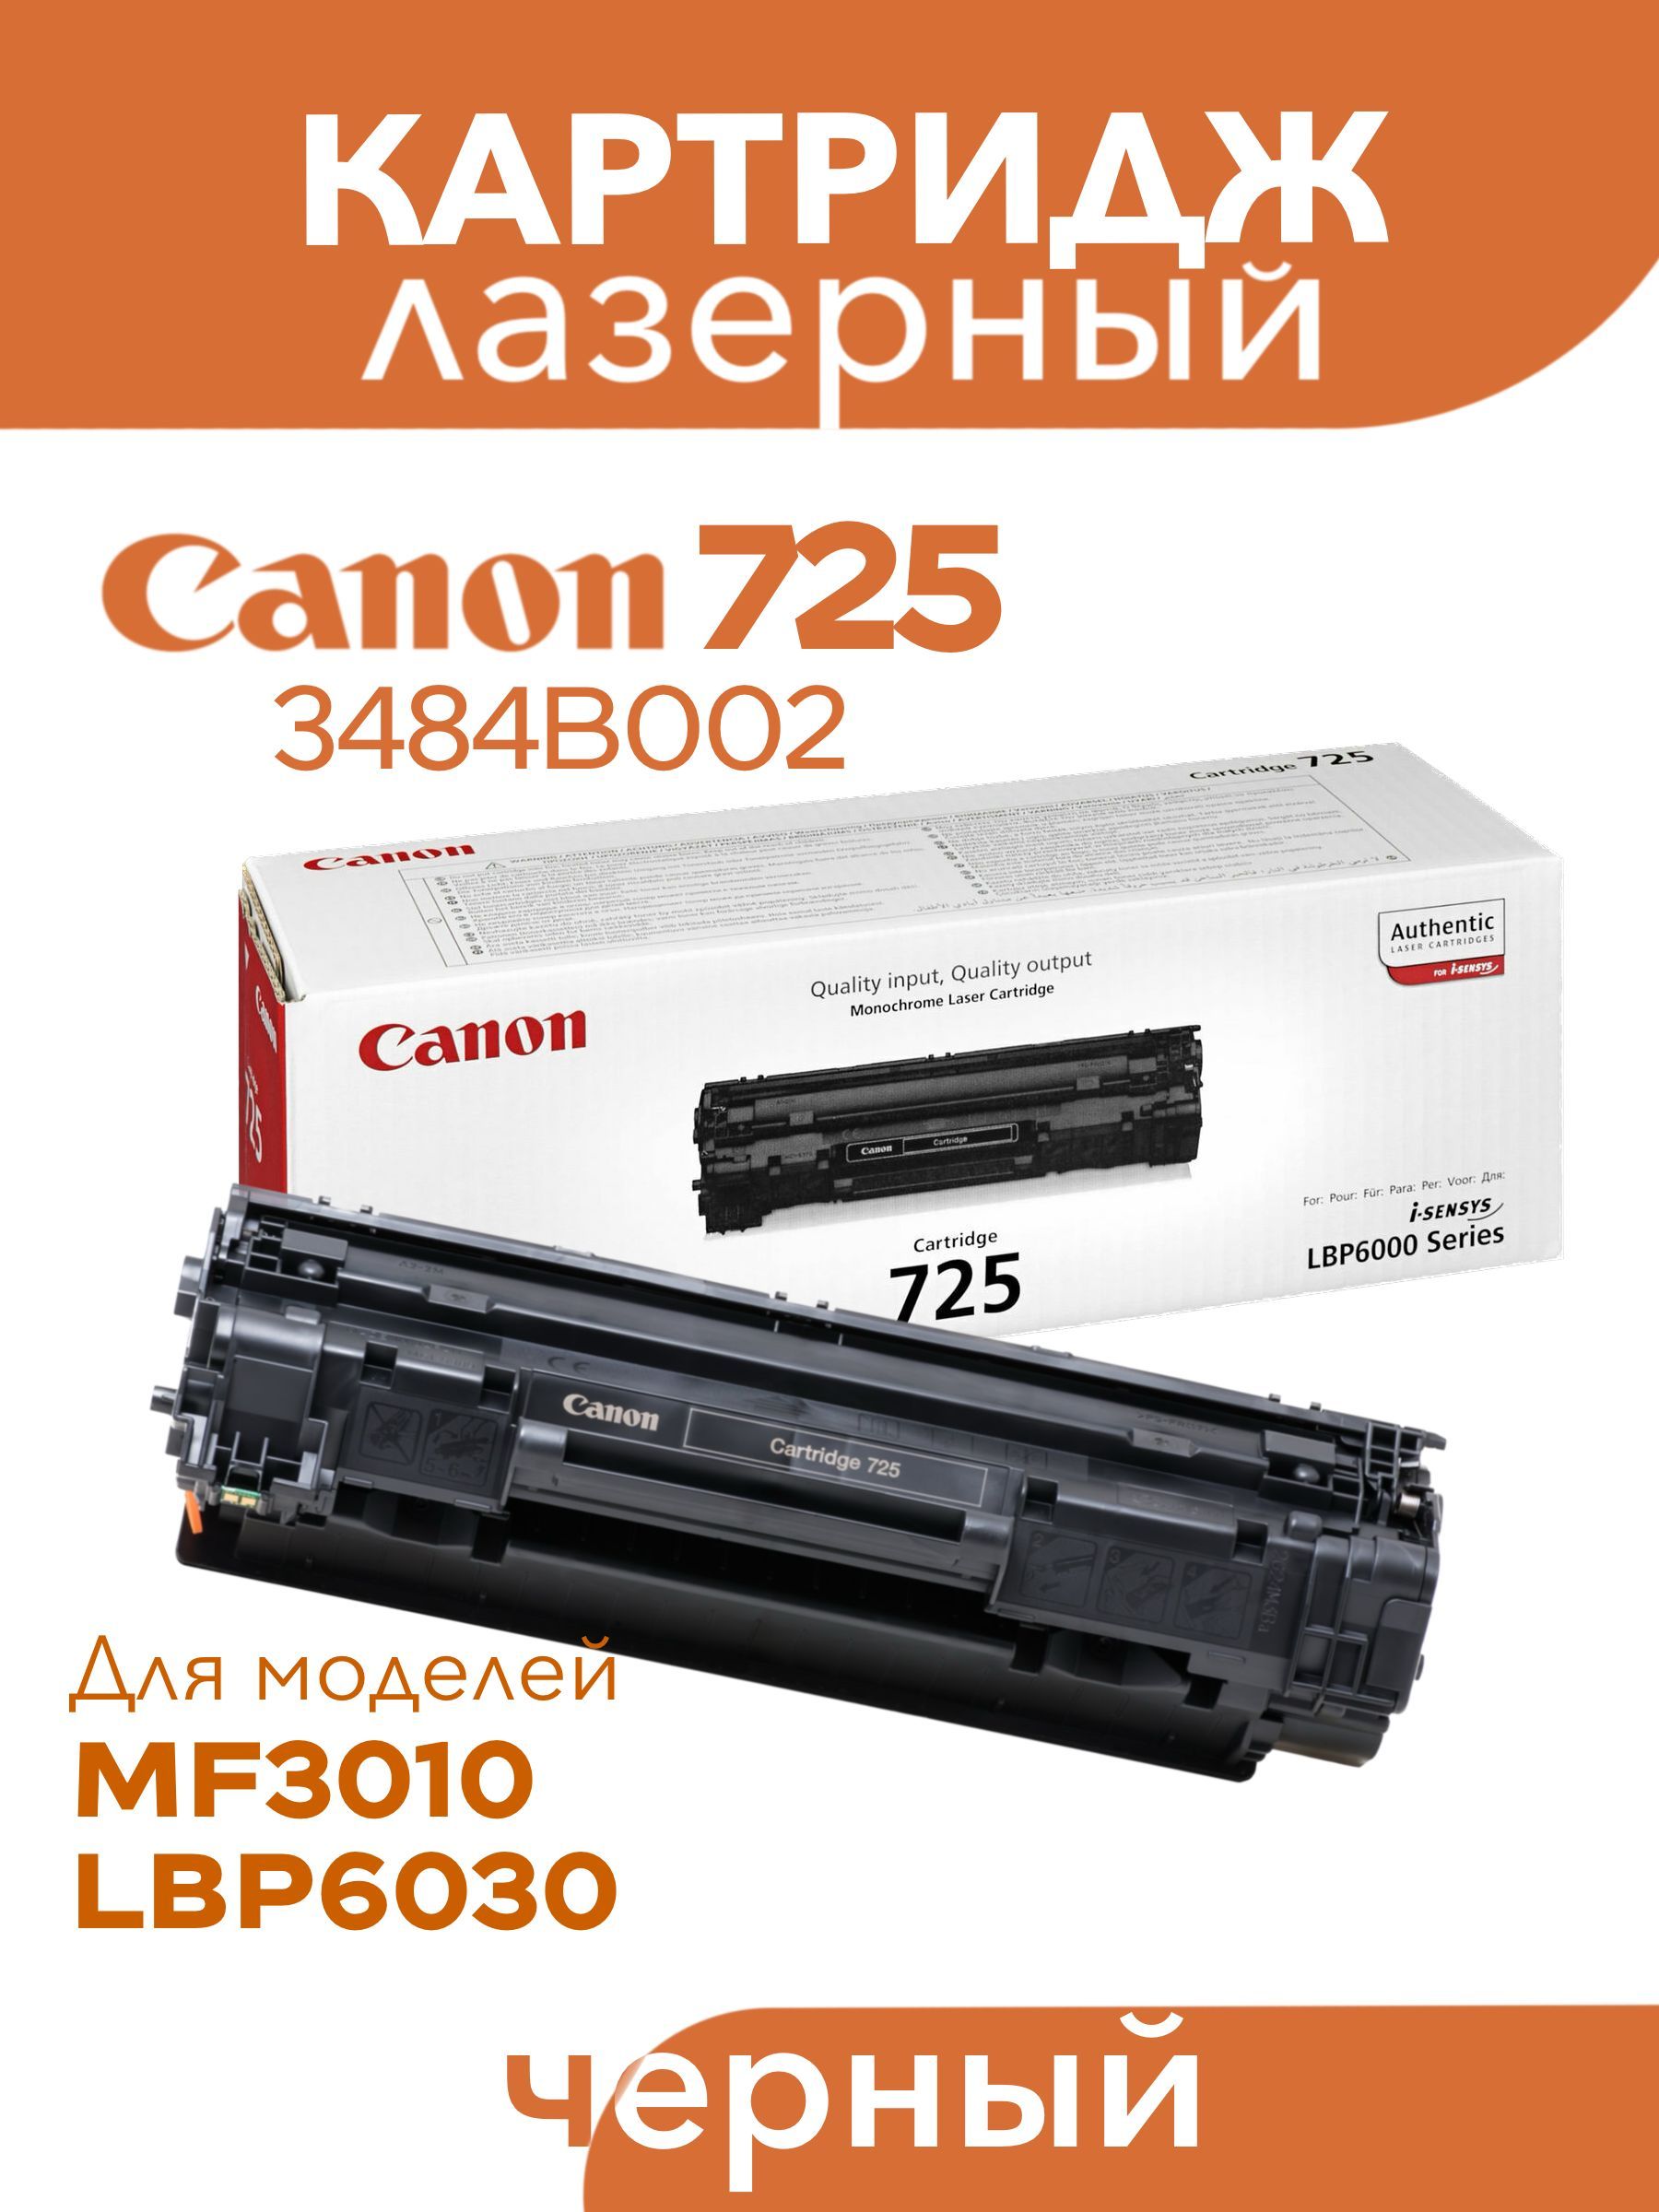 Canon cartridge 725